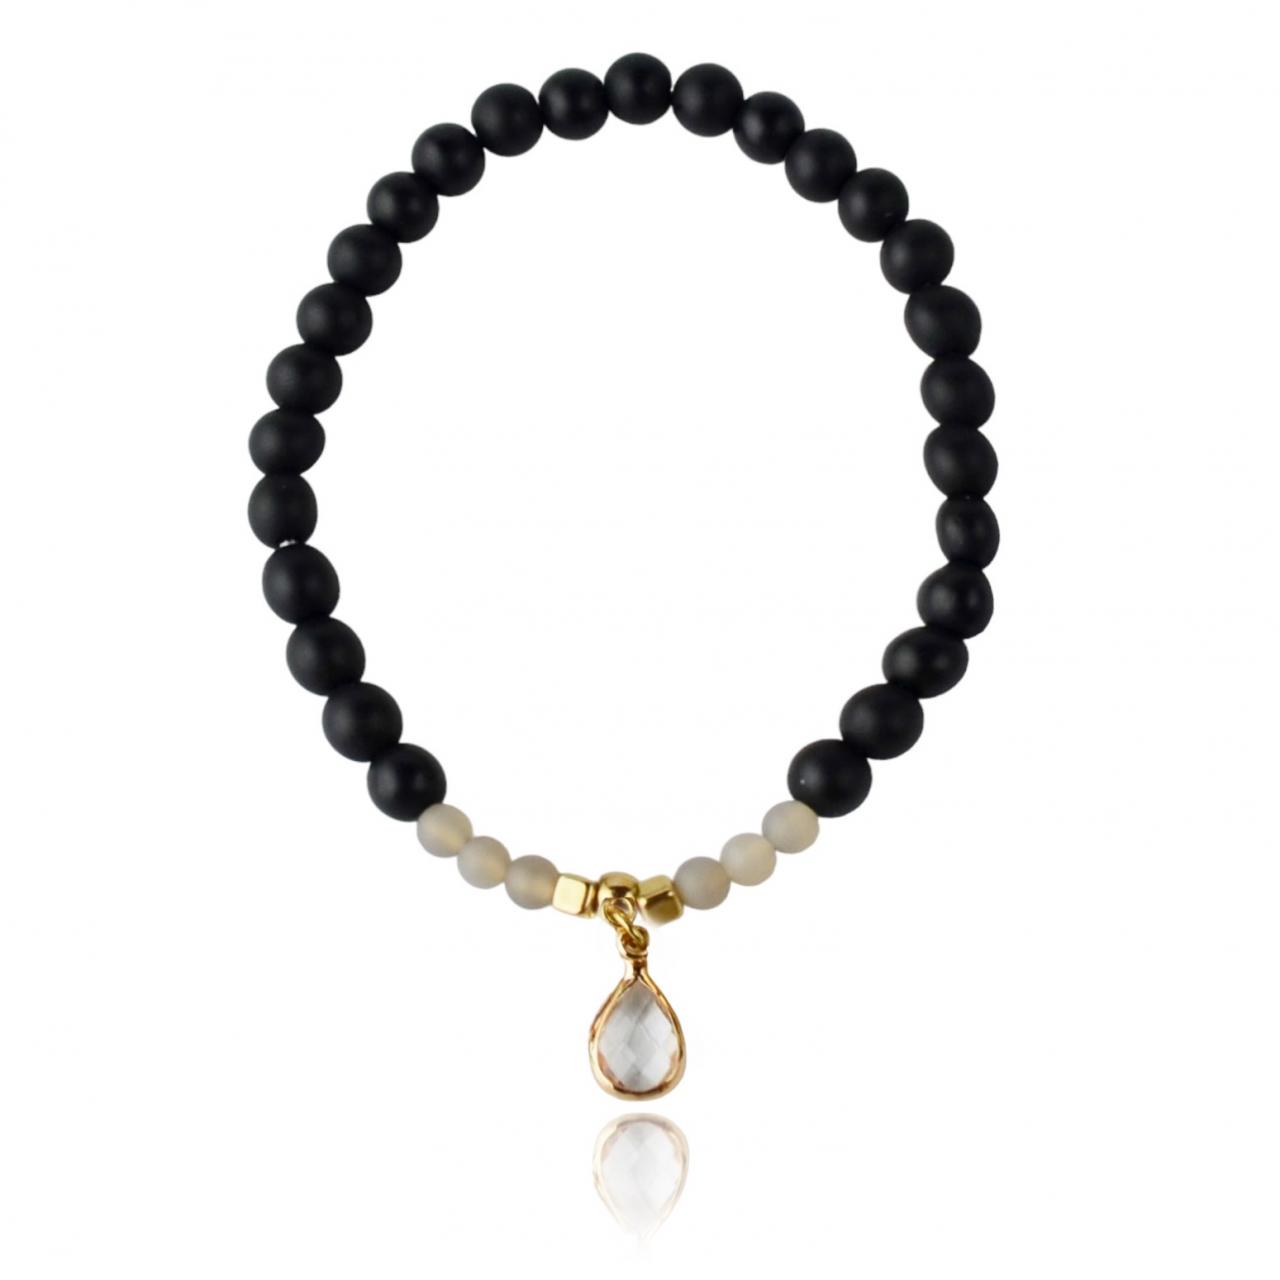 5%off | Blackstone Agate Beads Bracelet Gemstone Jewelry For Her Price | Maritavita | Kk10